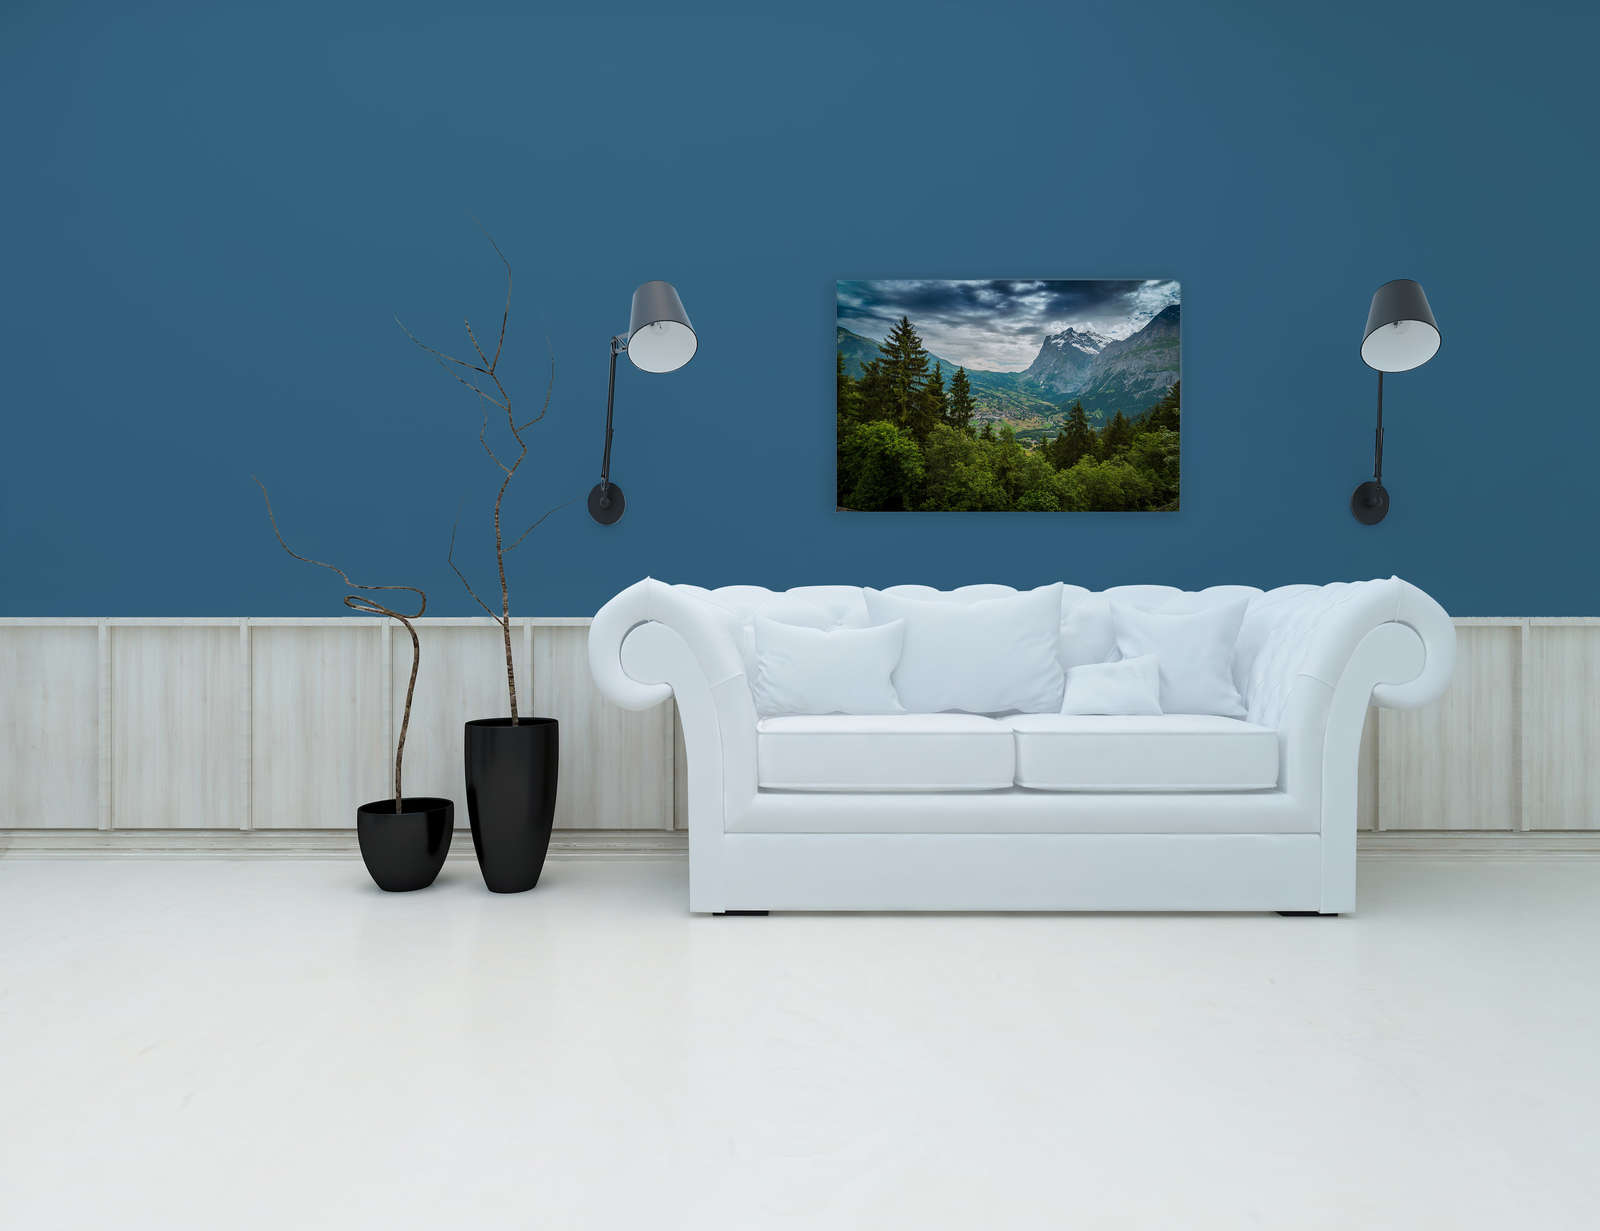             Canvas with mountain landscape - 0.90 m x 0.60 m
        